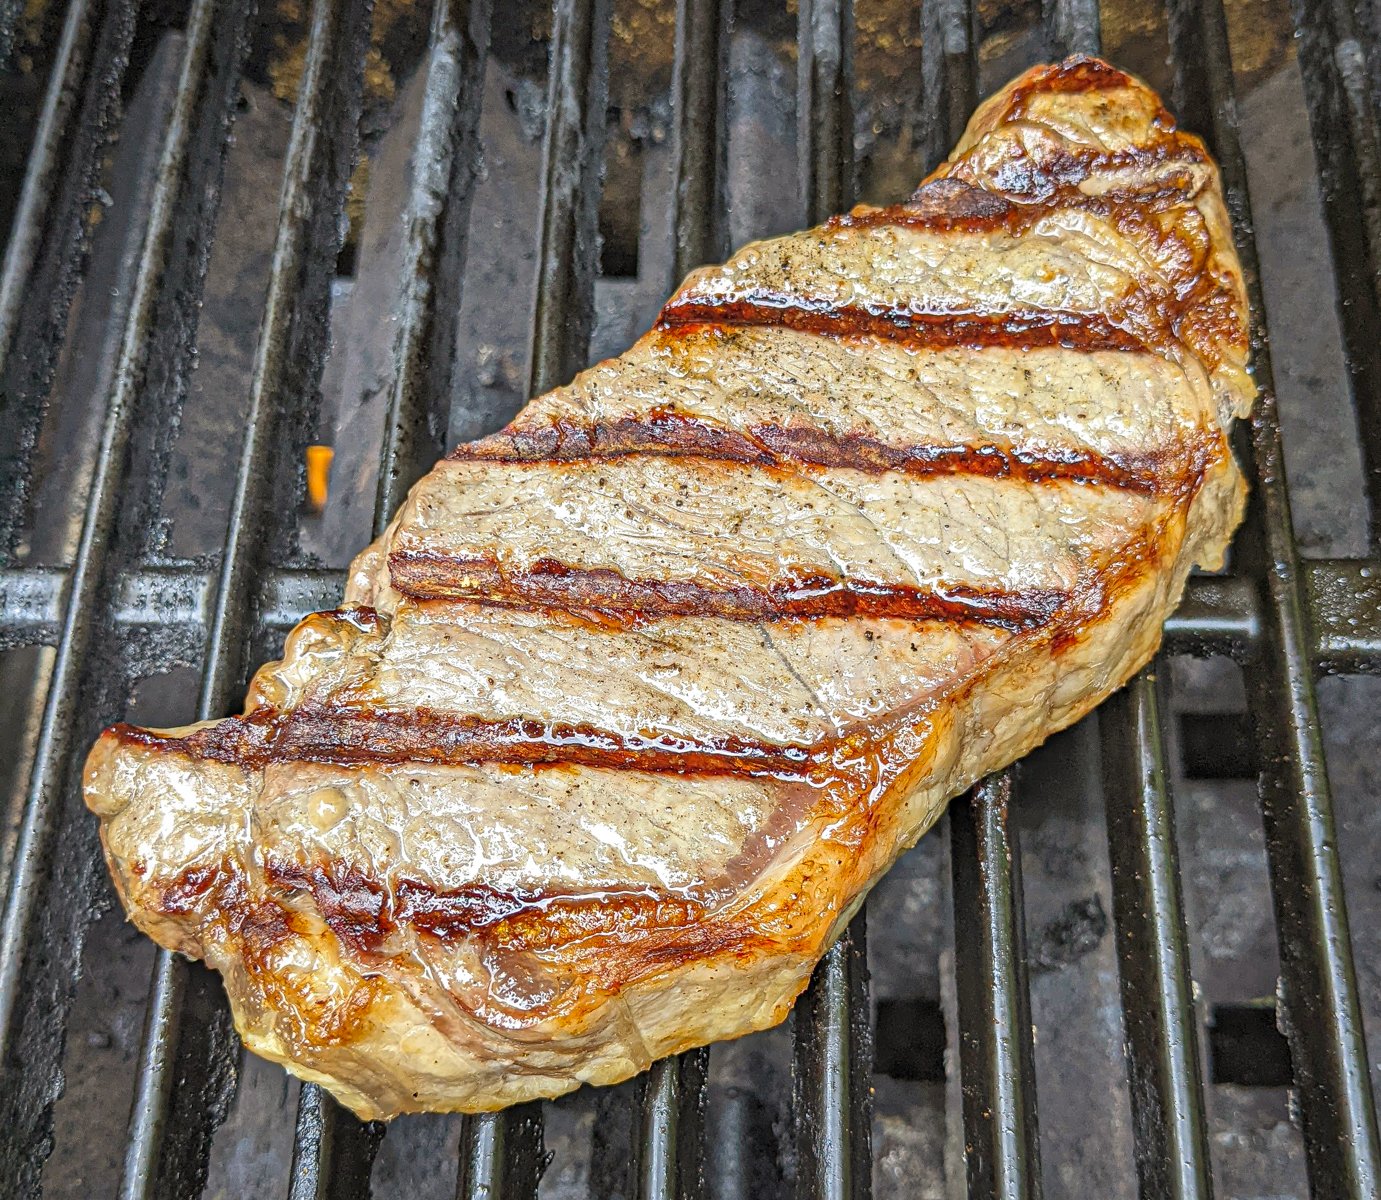 Gilling NY Strip steak in grill grates. 